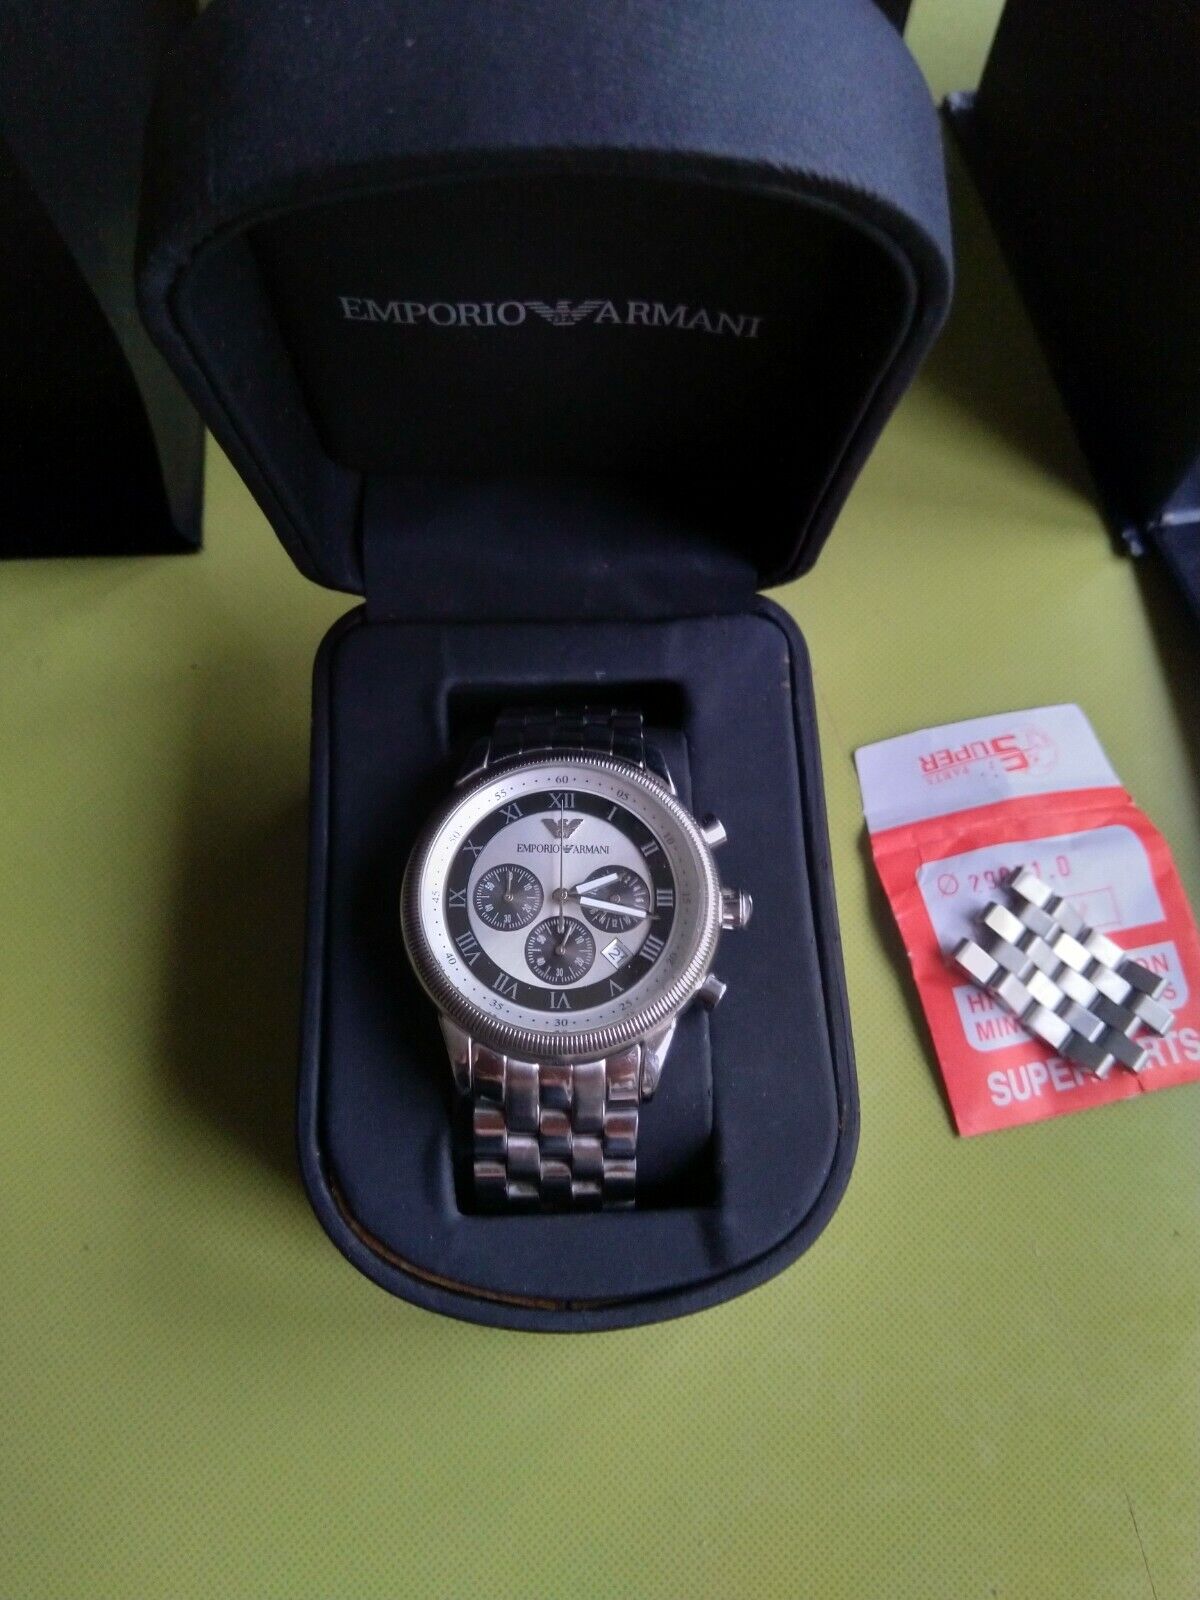 PANDA Emporio Armani Ar-0566 Chronograph Watch With Box